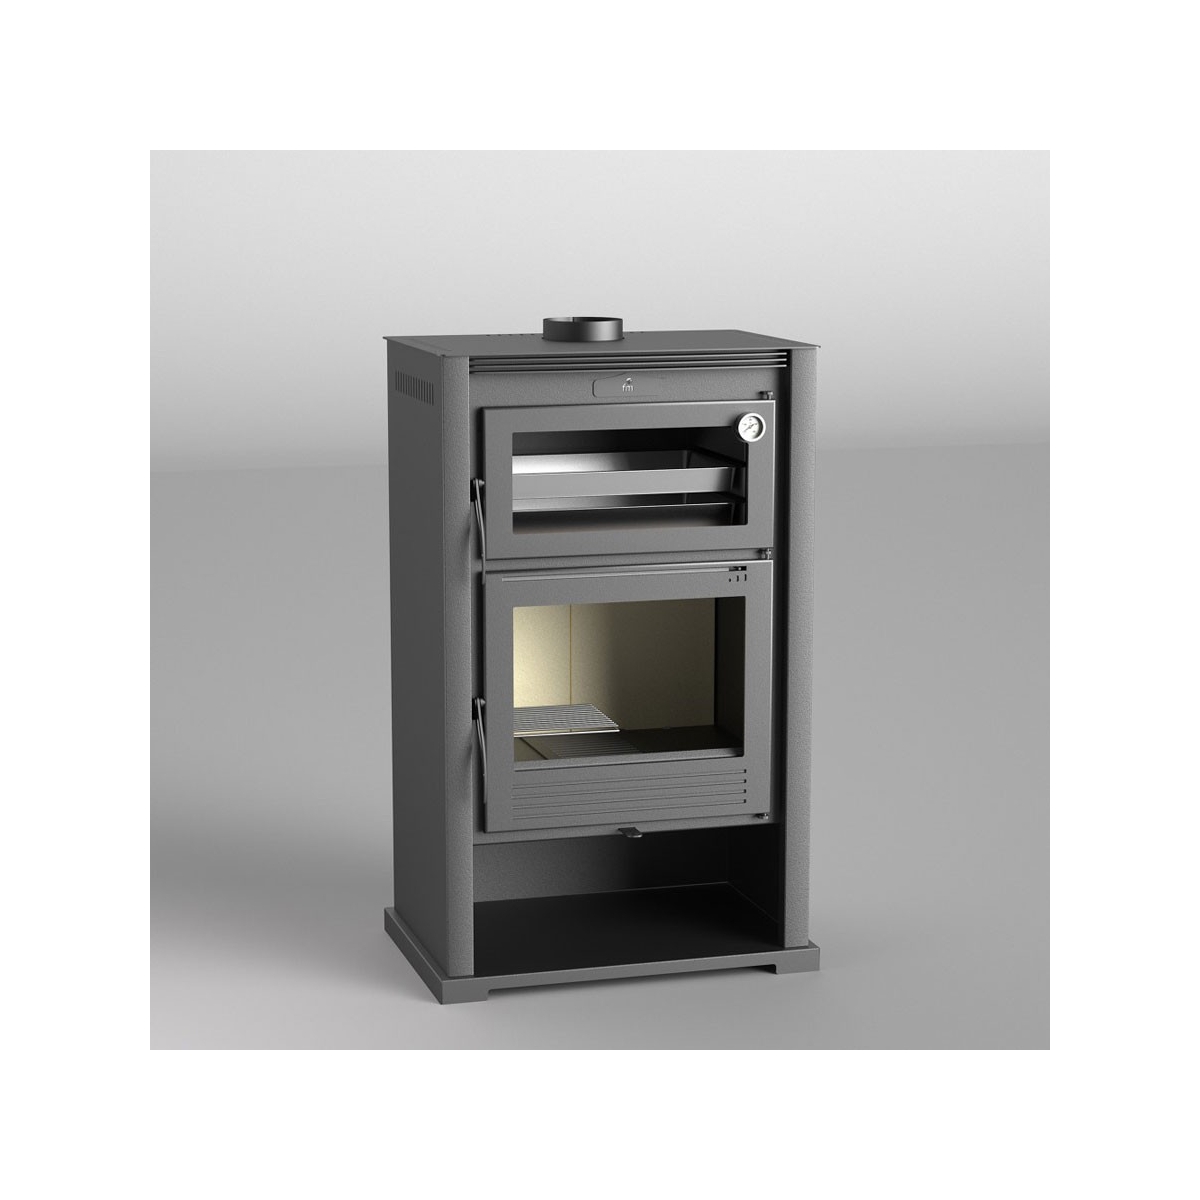 Estufas de leña FM Calefacción FM M-107 - Estufa de leña con leñero, doble cámara y horno online